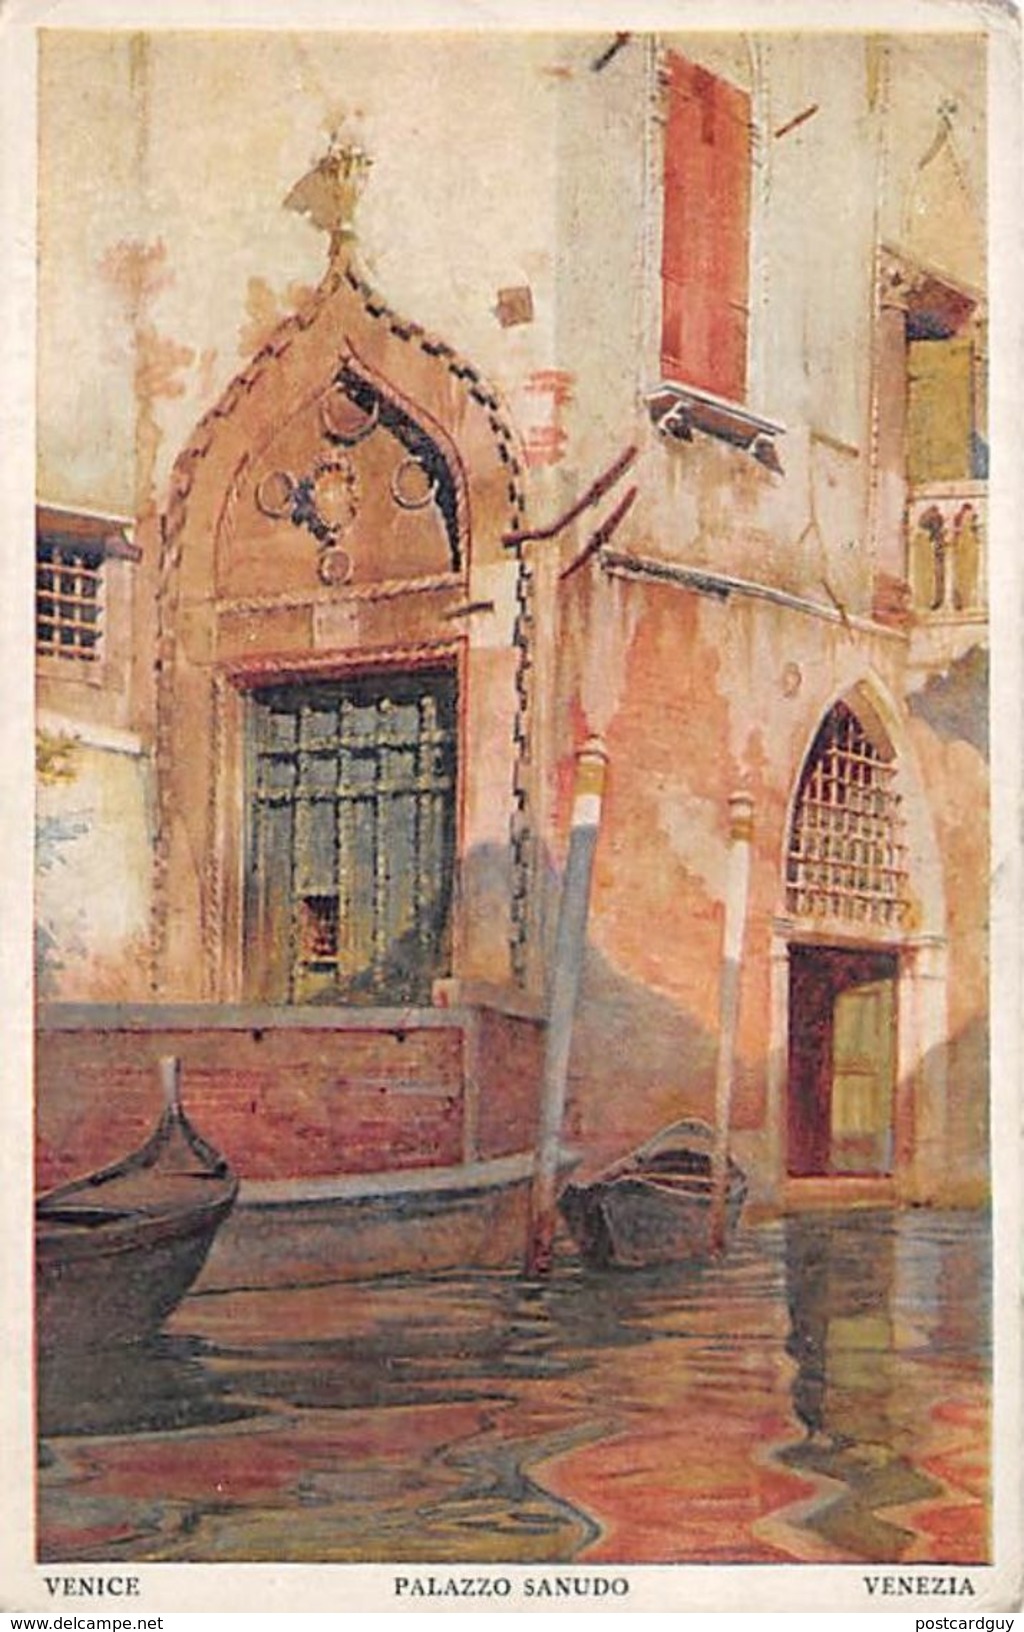 2 Postcards - Venezia - Palazzo Sanudo & Ingresso Al Canal Grande - LITHO MEDICI SOCIETY LONDON - Venezia (Venice)